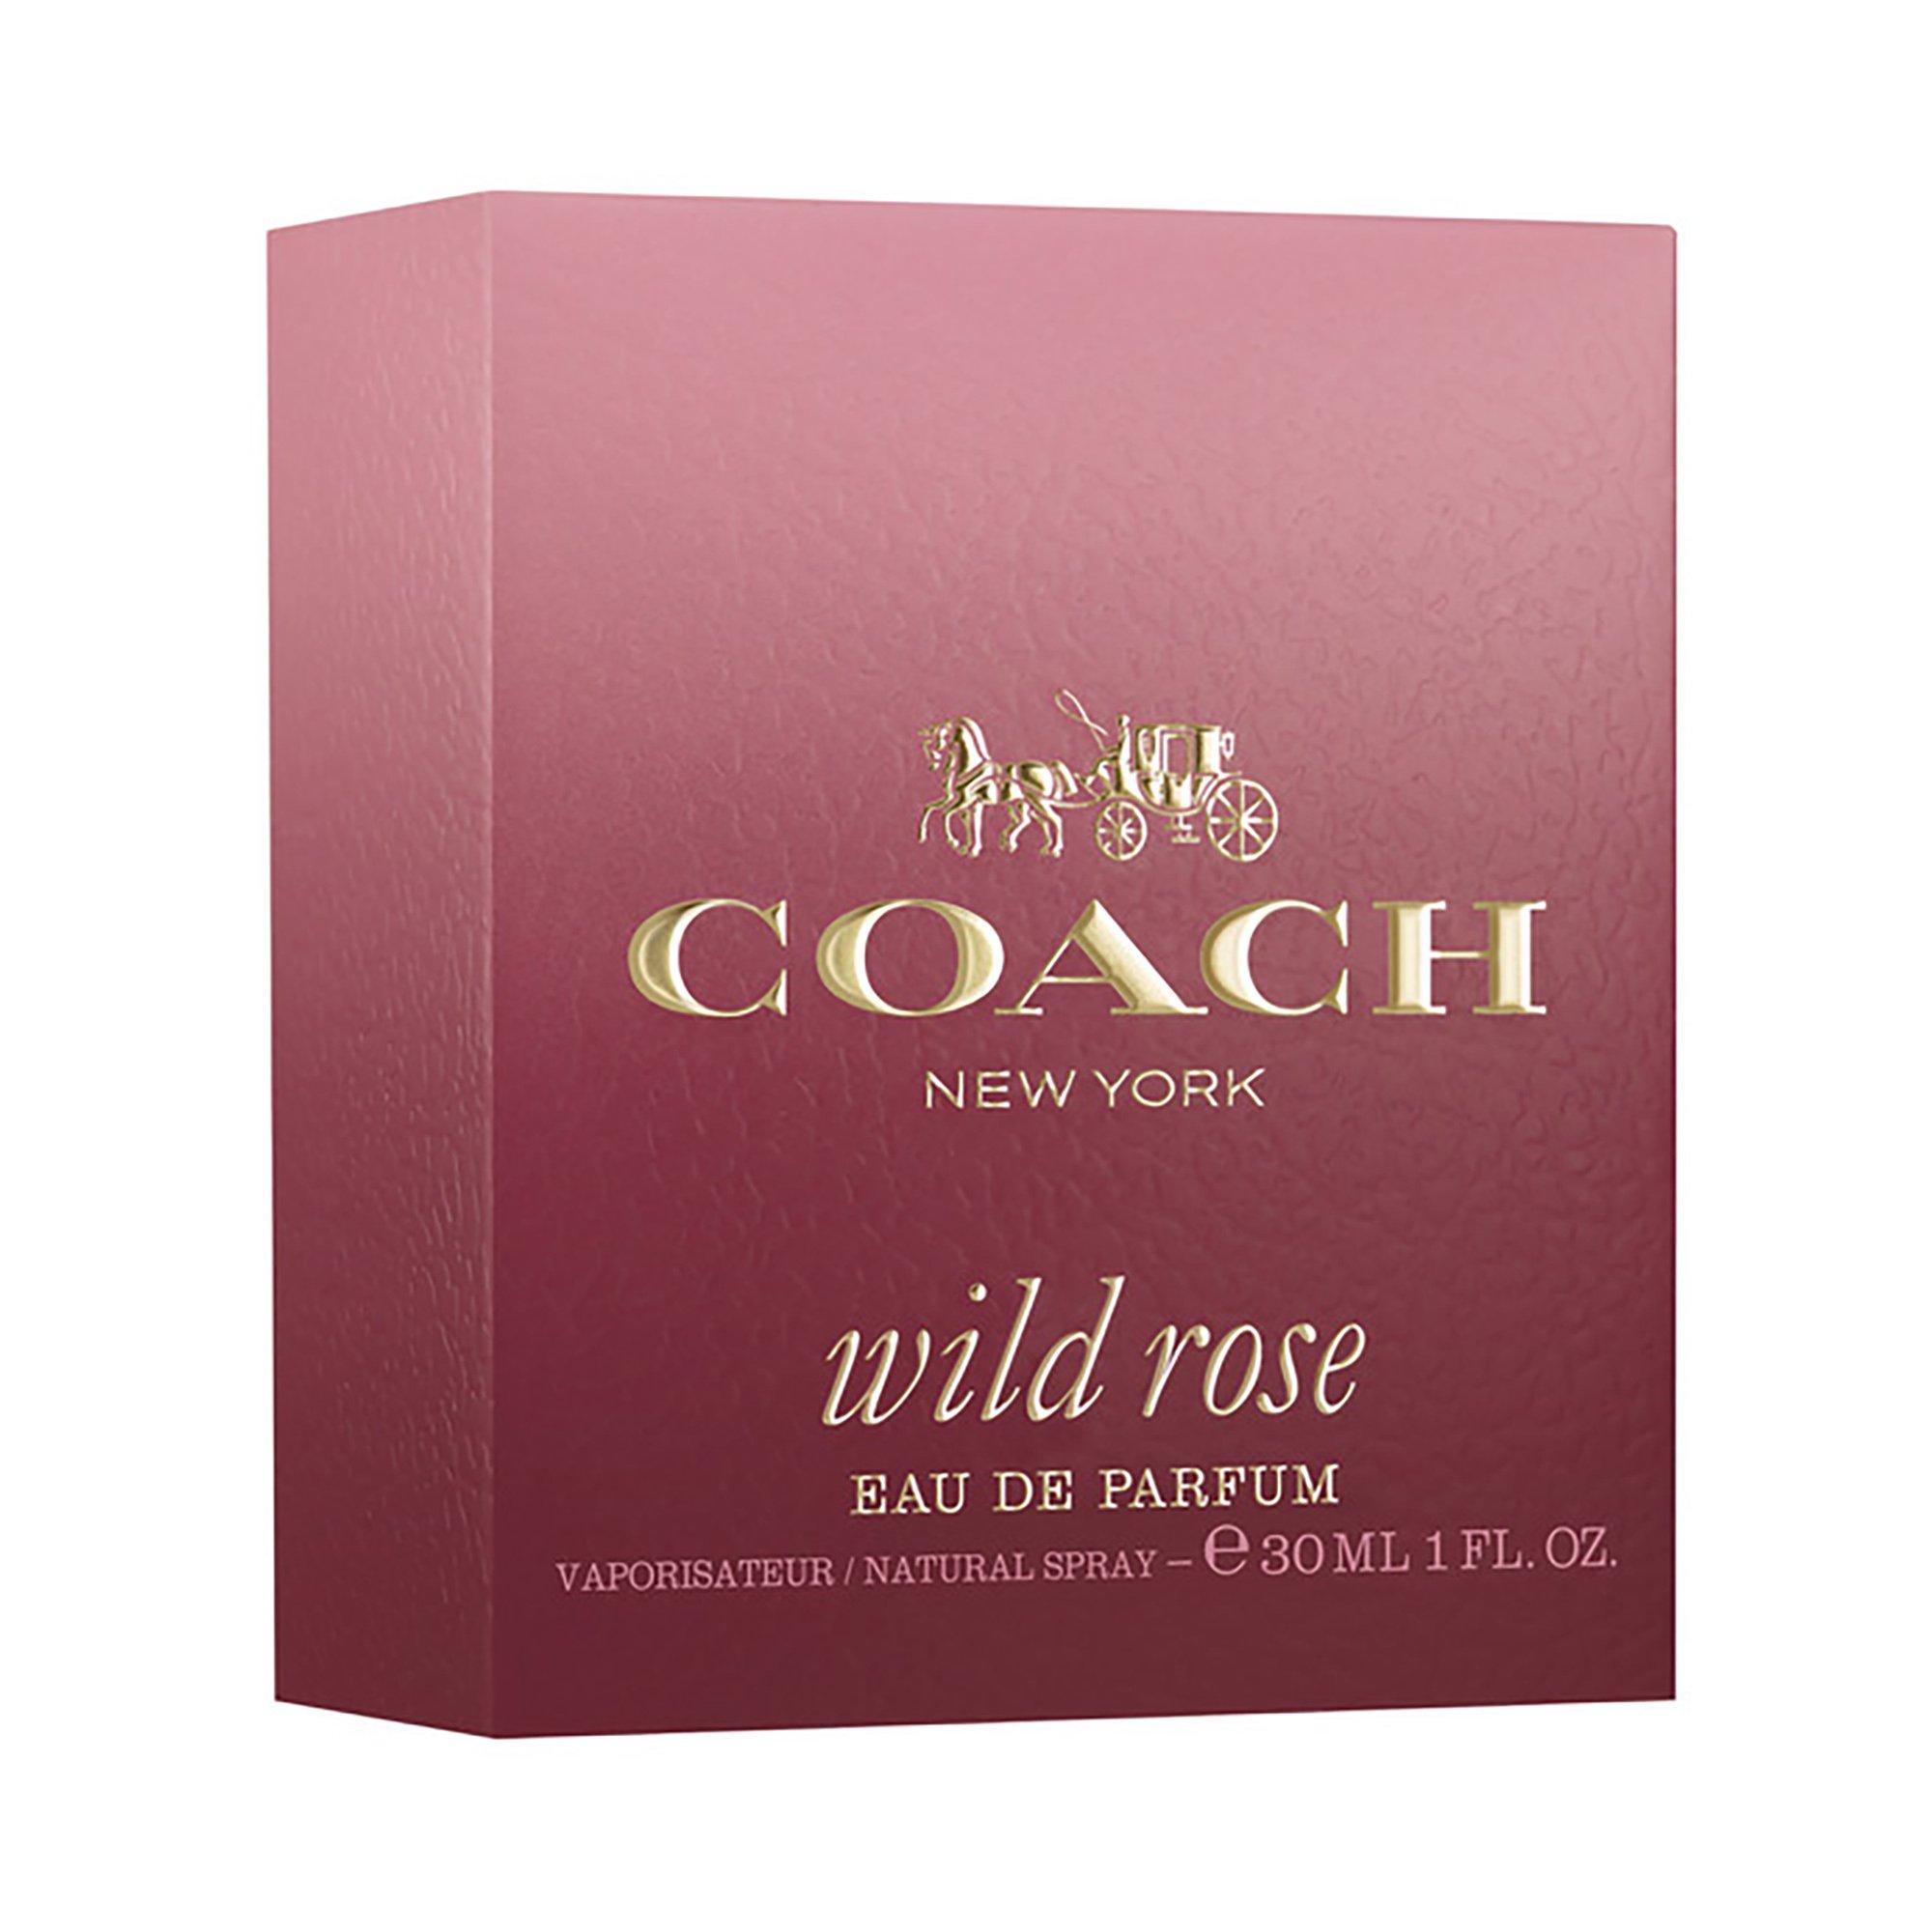 COACH WILD ROSE Wild Rose, Eau De Parfum 